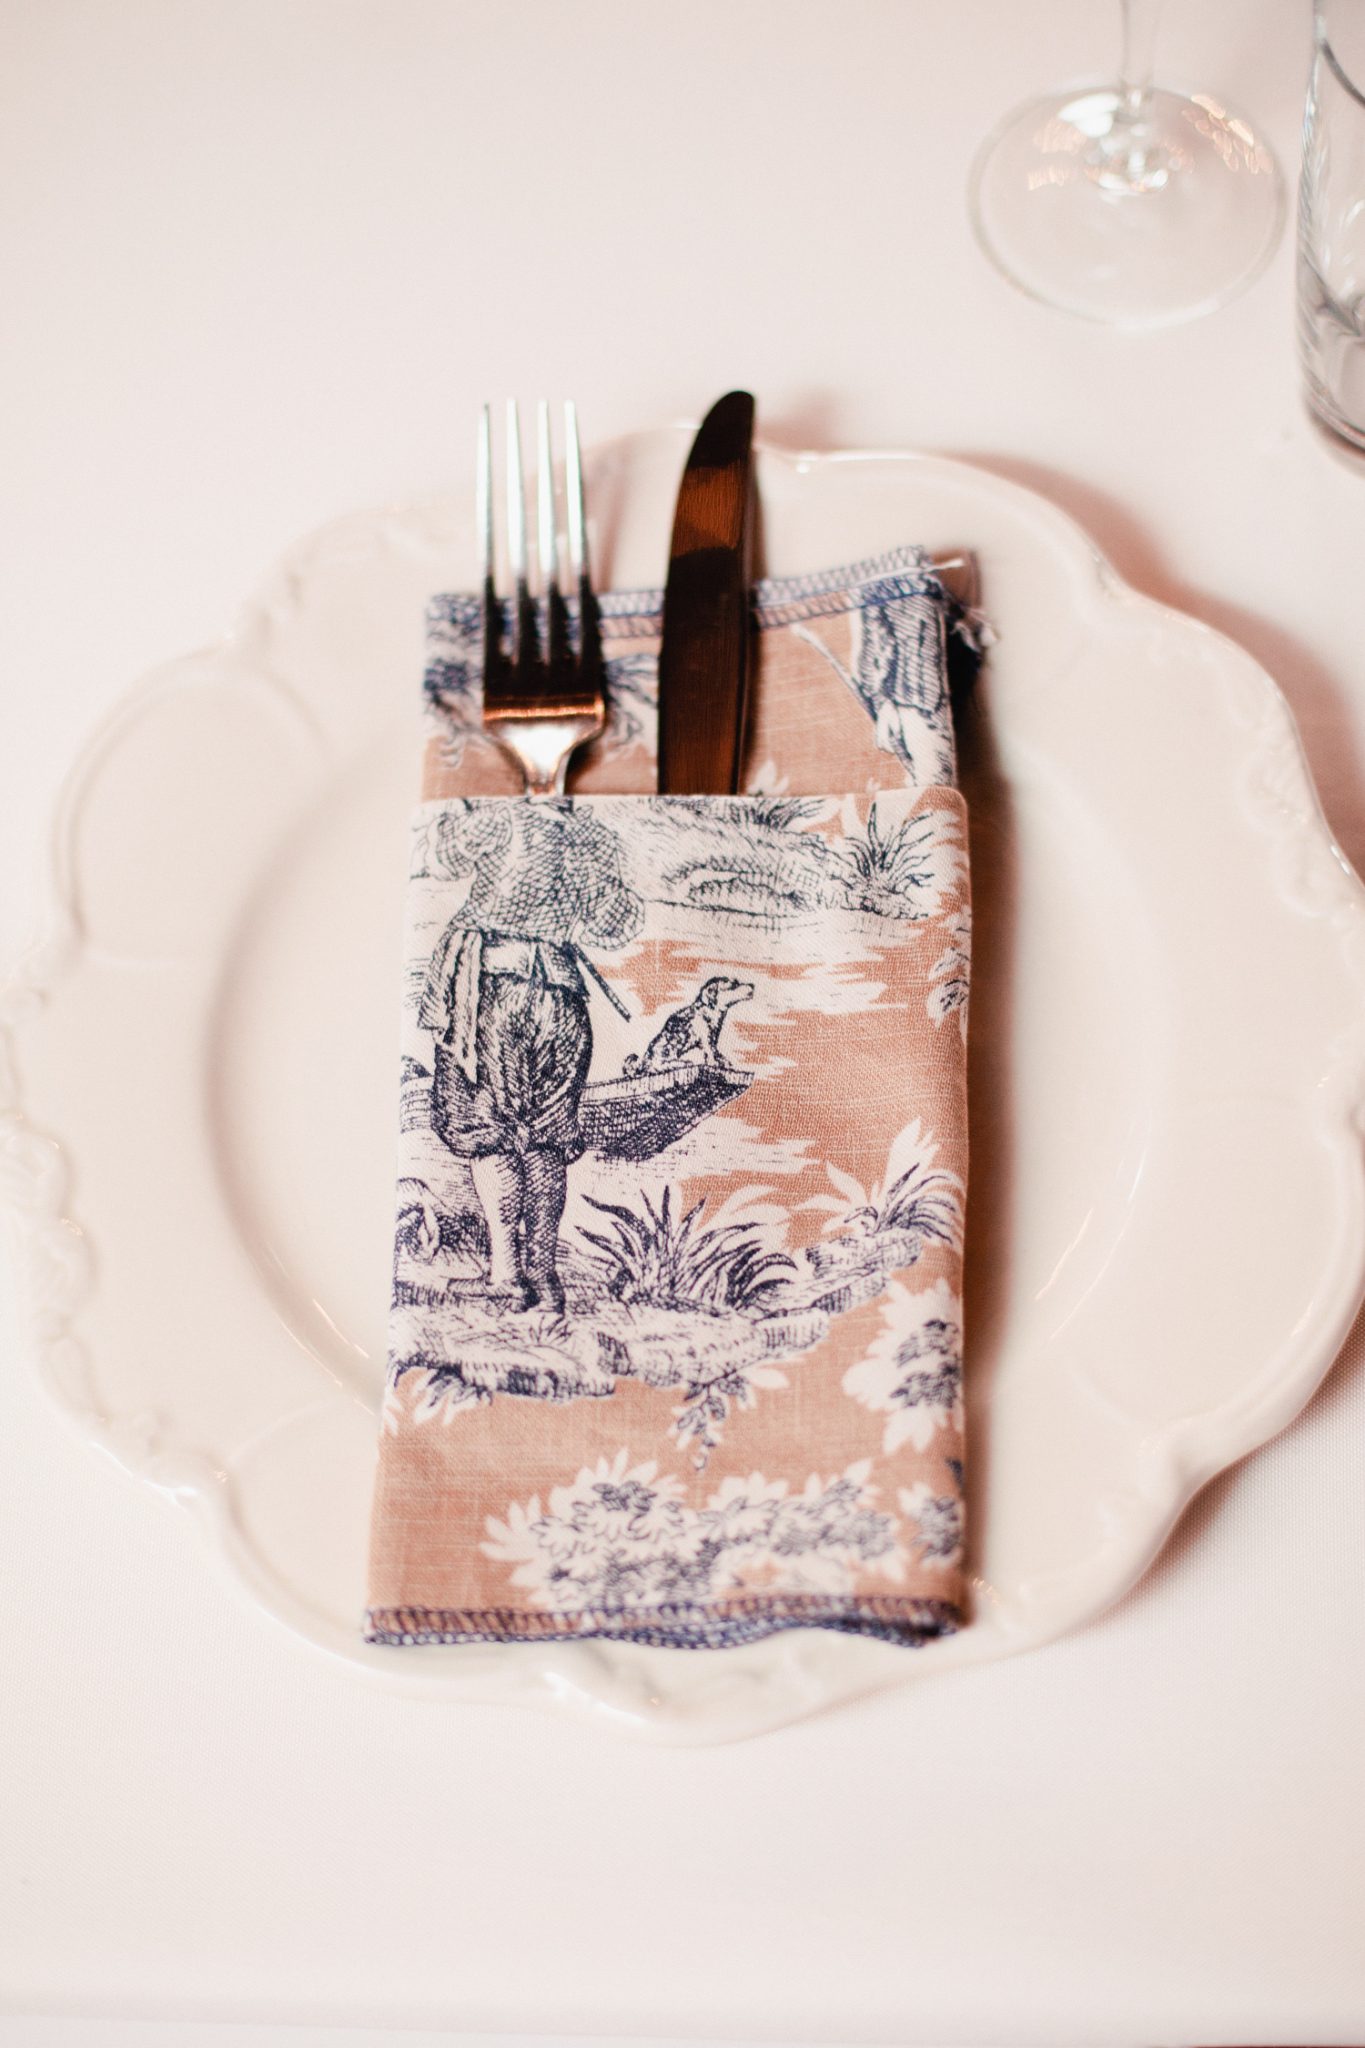 Beautiful handmade napkins brought that true vintage farm feel